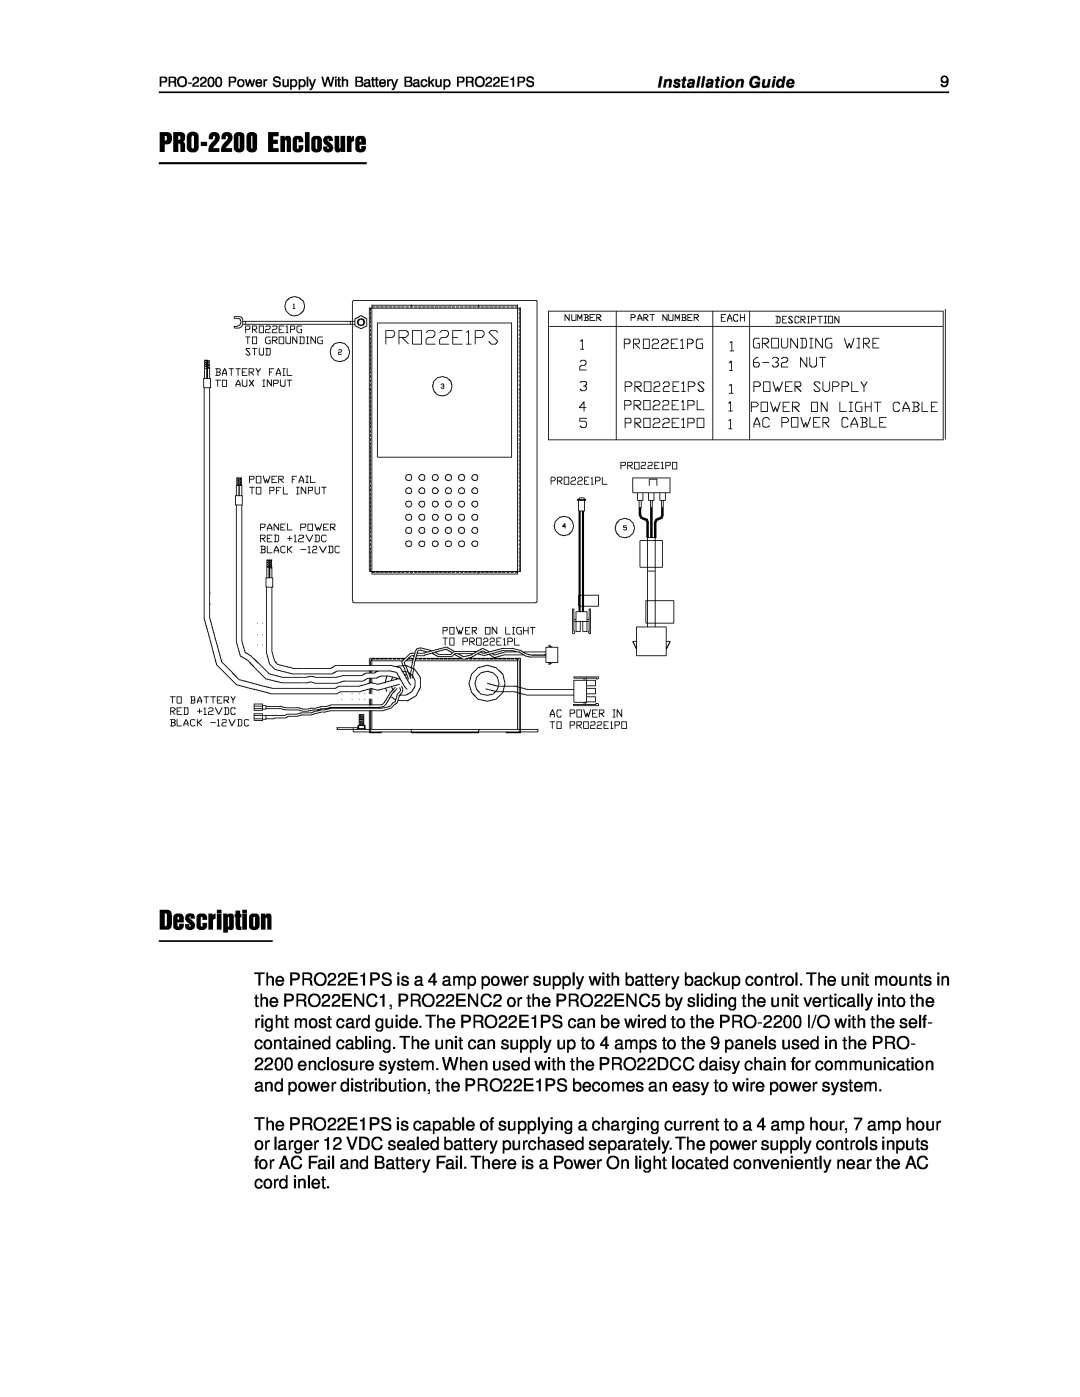 Honeywell installation manual PRO-2200Enclosure Description 